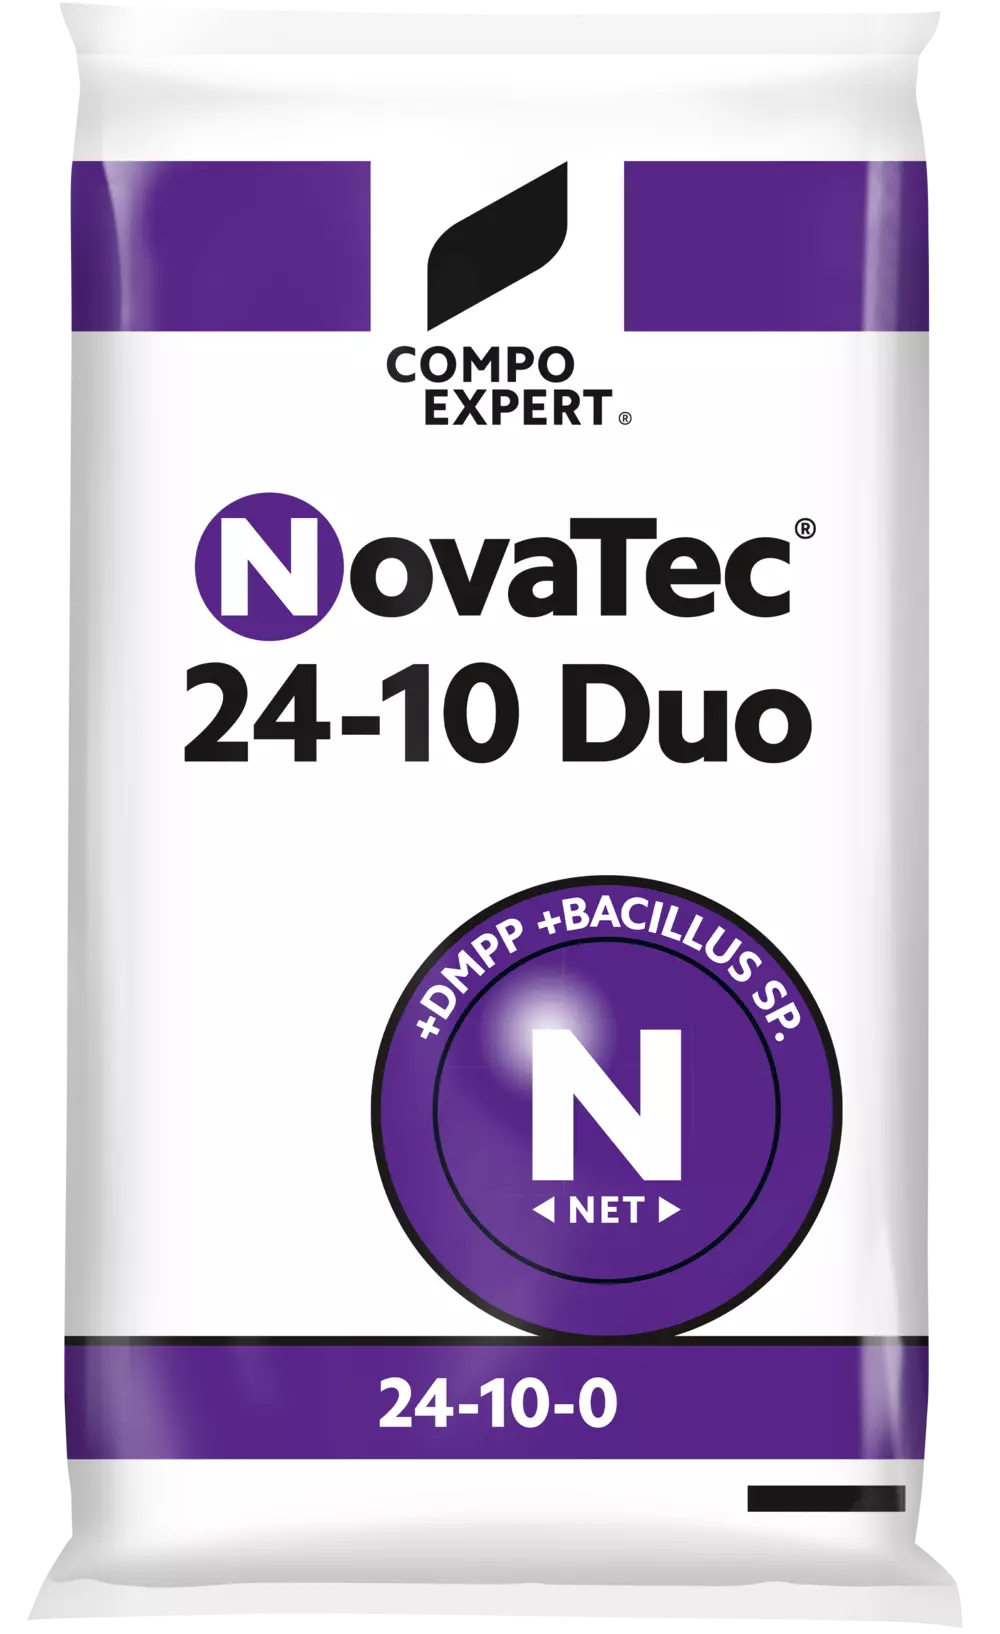 novatec 24-10 Duo